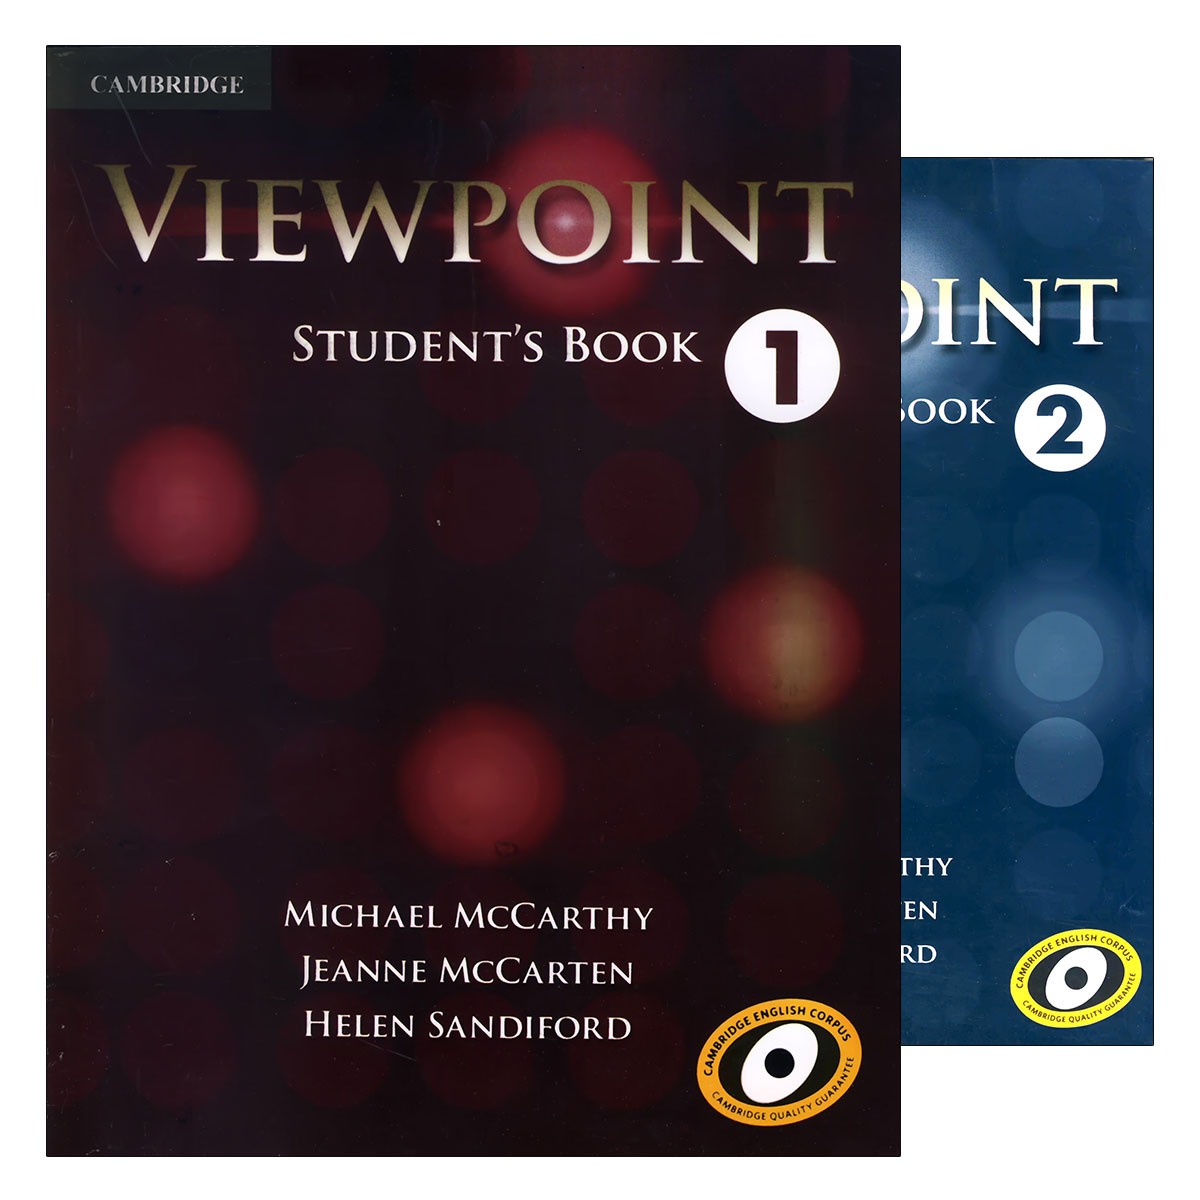 Viewpoint Book Series – فروشگاه انتشارات زبان مهر